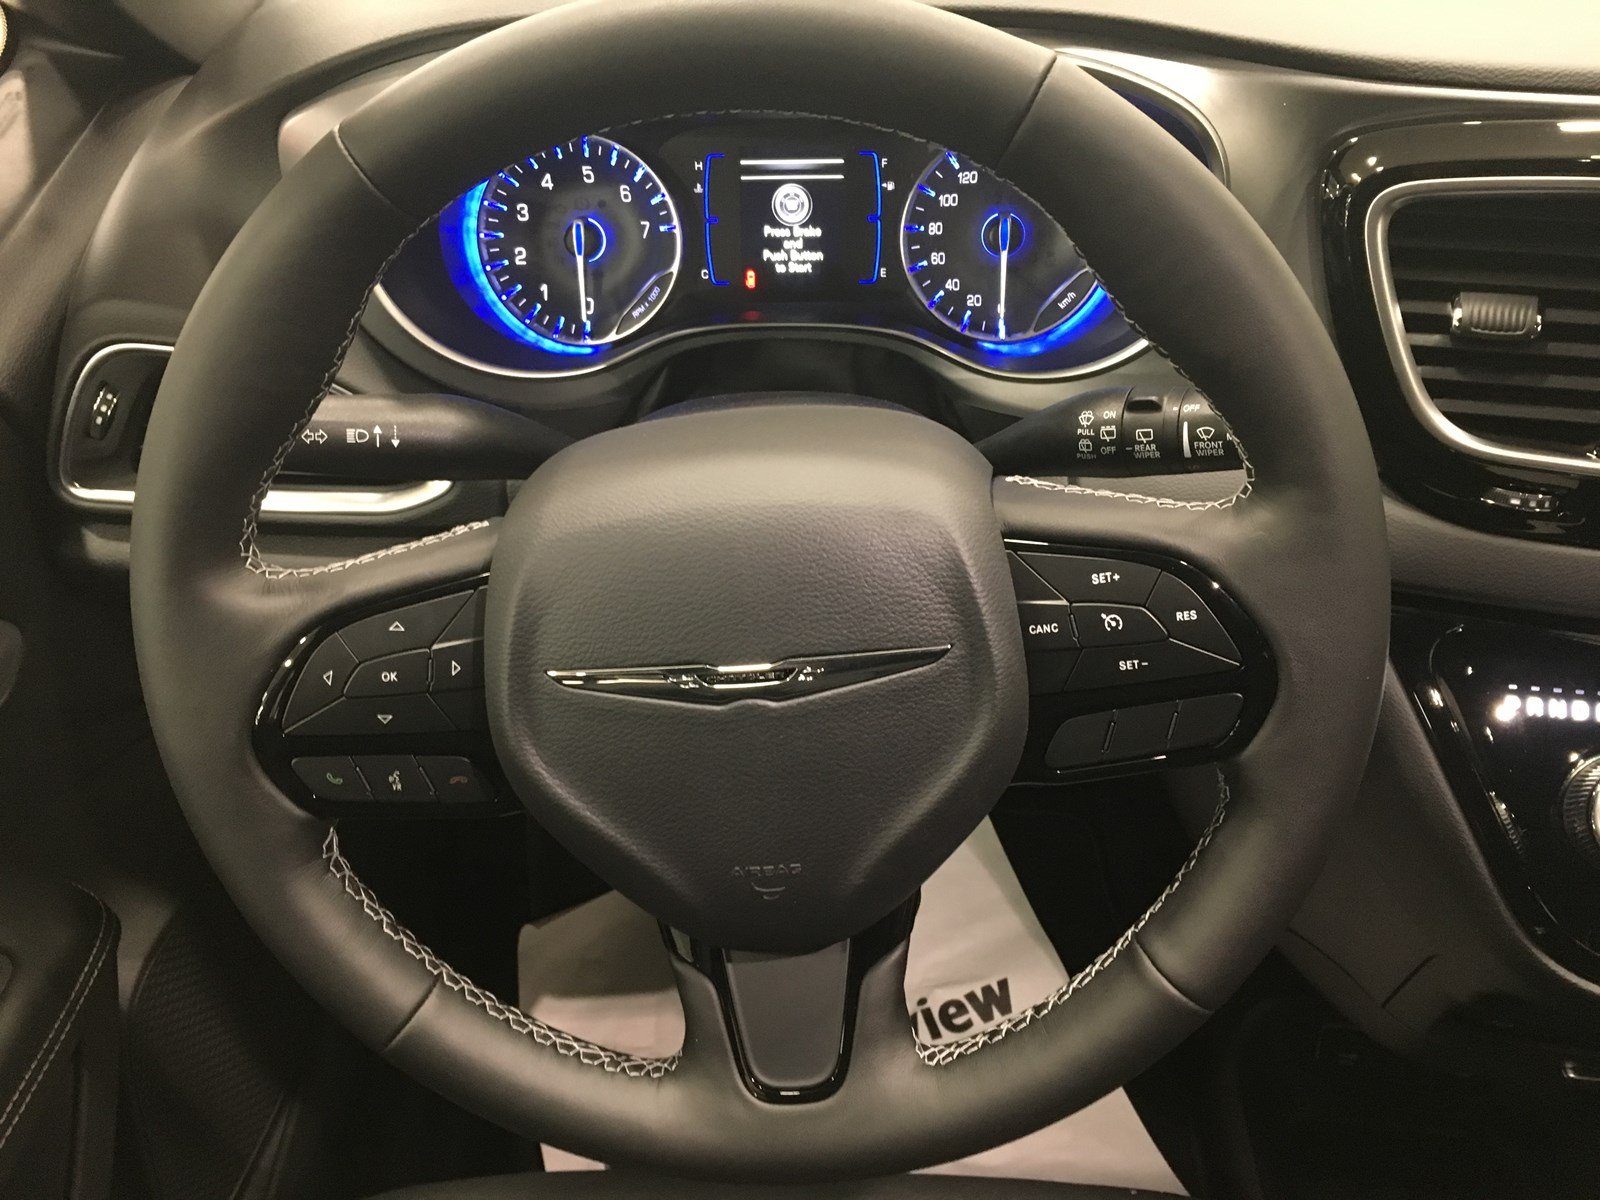 New 2019 Chrysler Pacifica TouringL 'S' Navigation